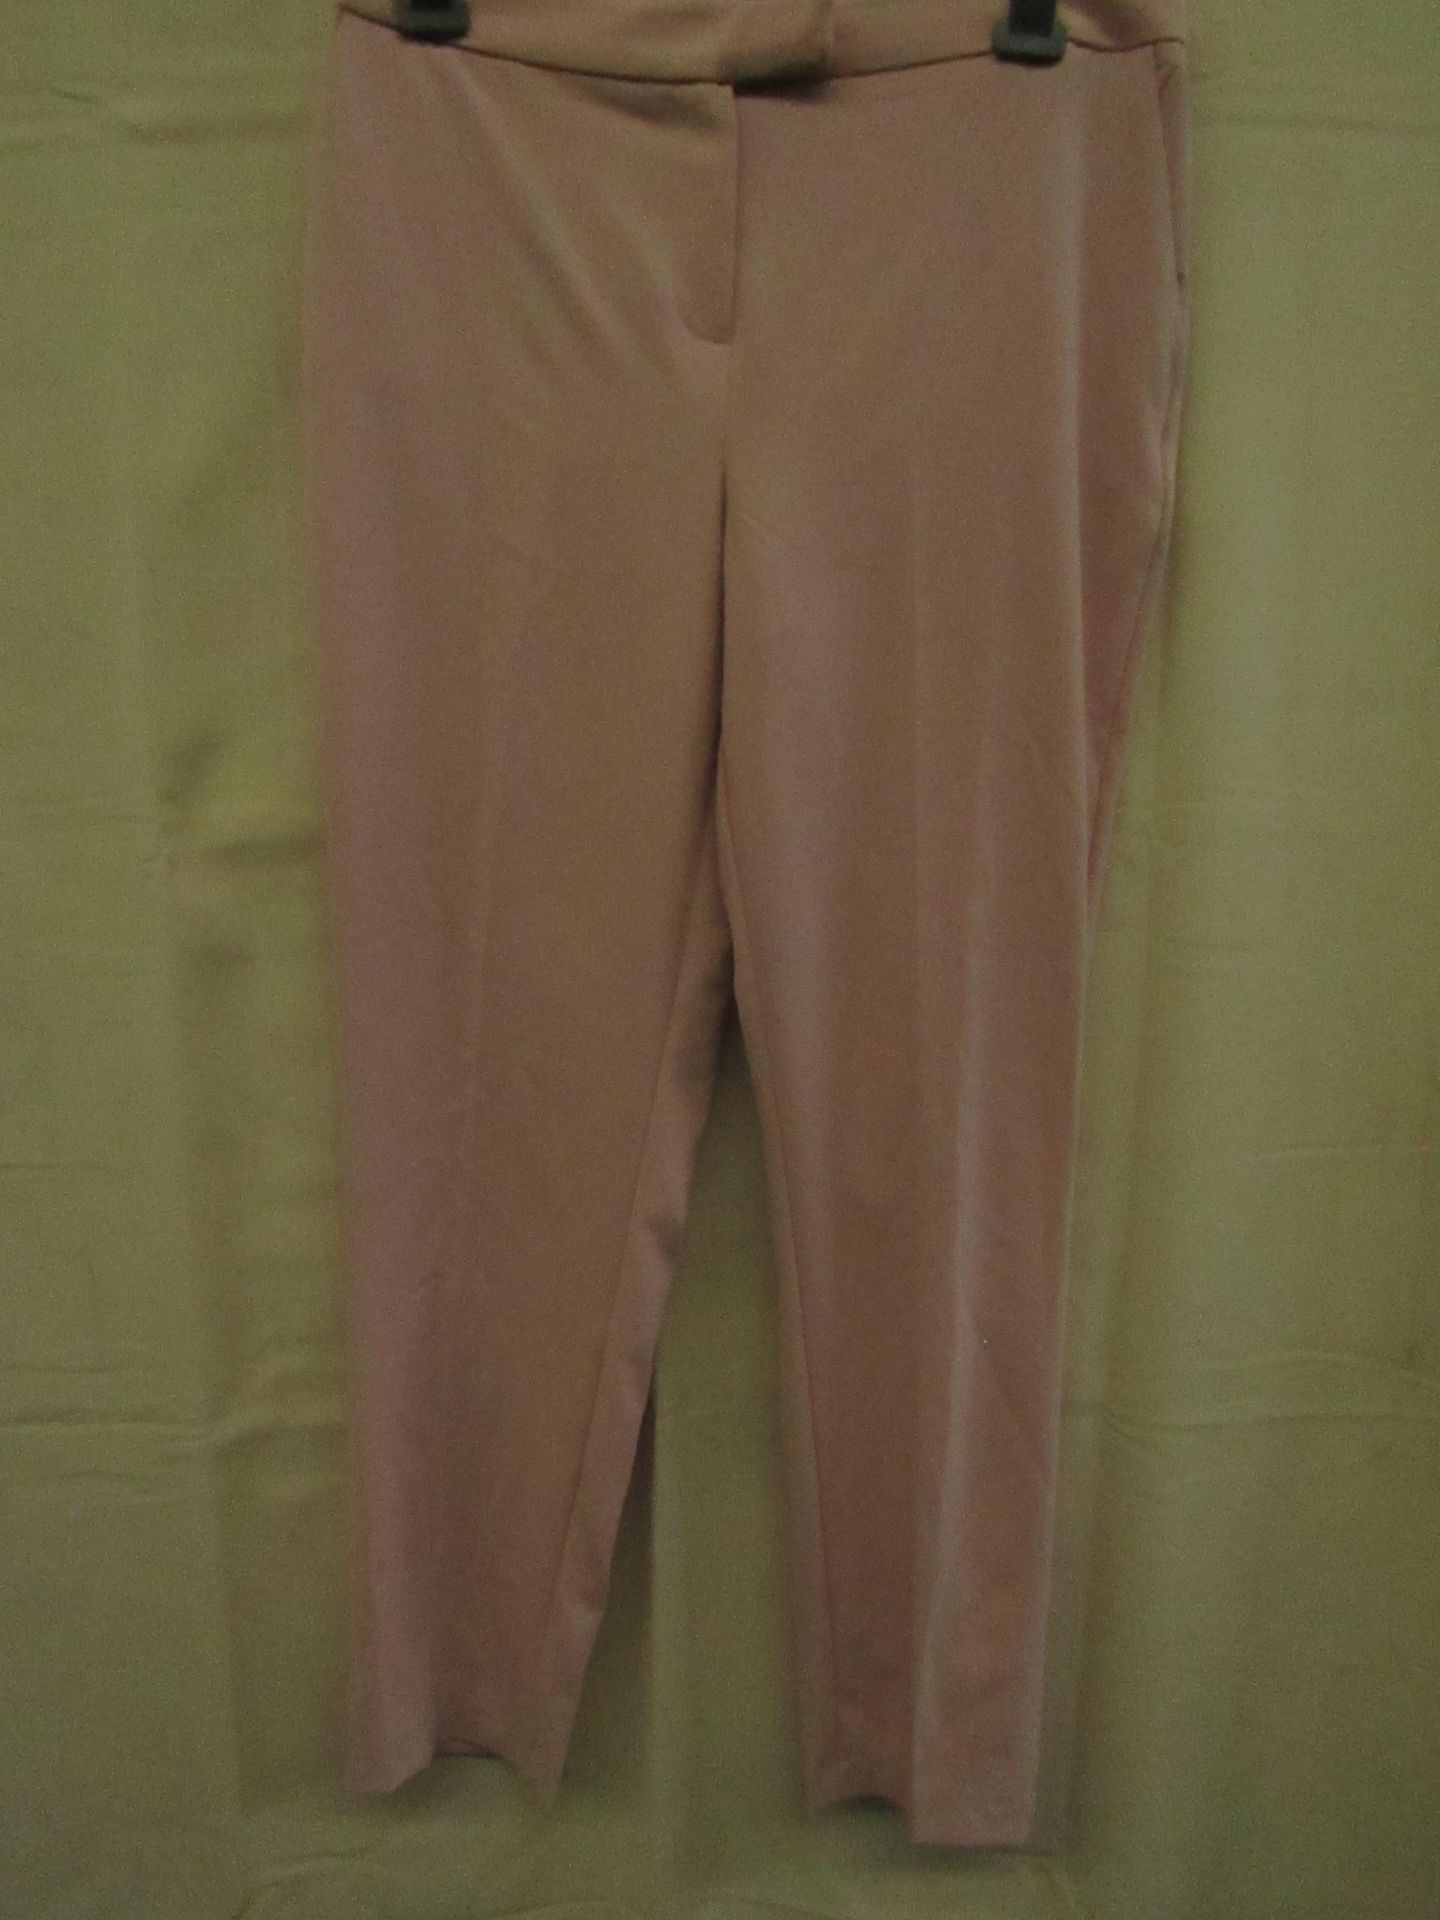 Kaleidoscope ladies Pink trousers, size 14